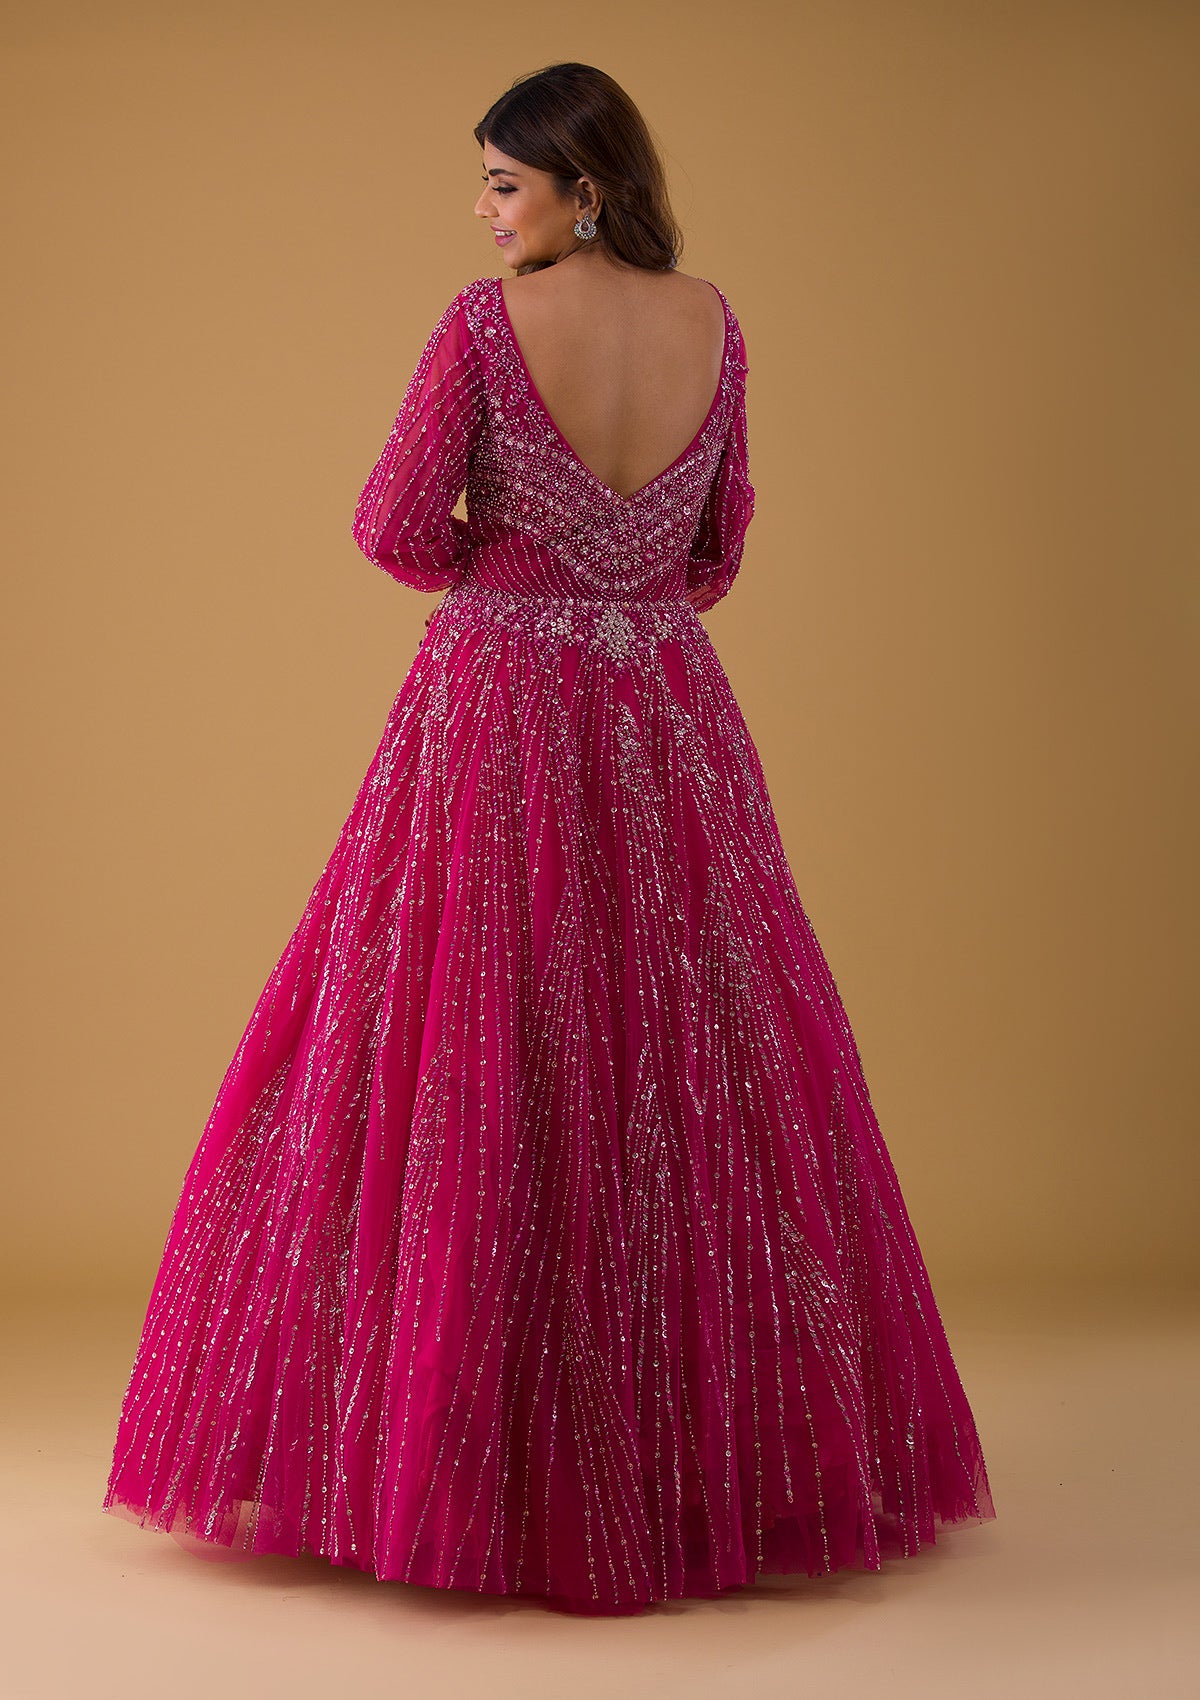 New designer best georgette pink color gown and soft net dupatta.